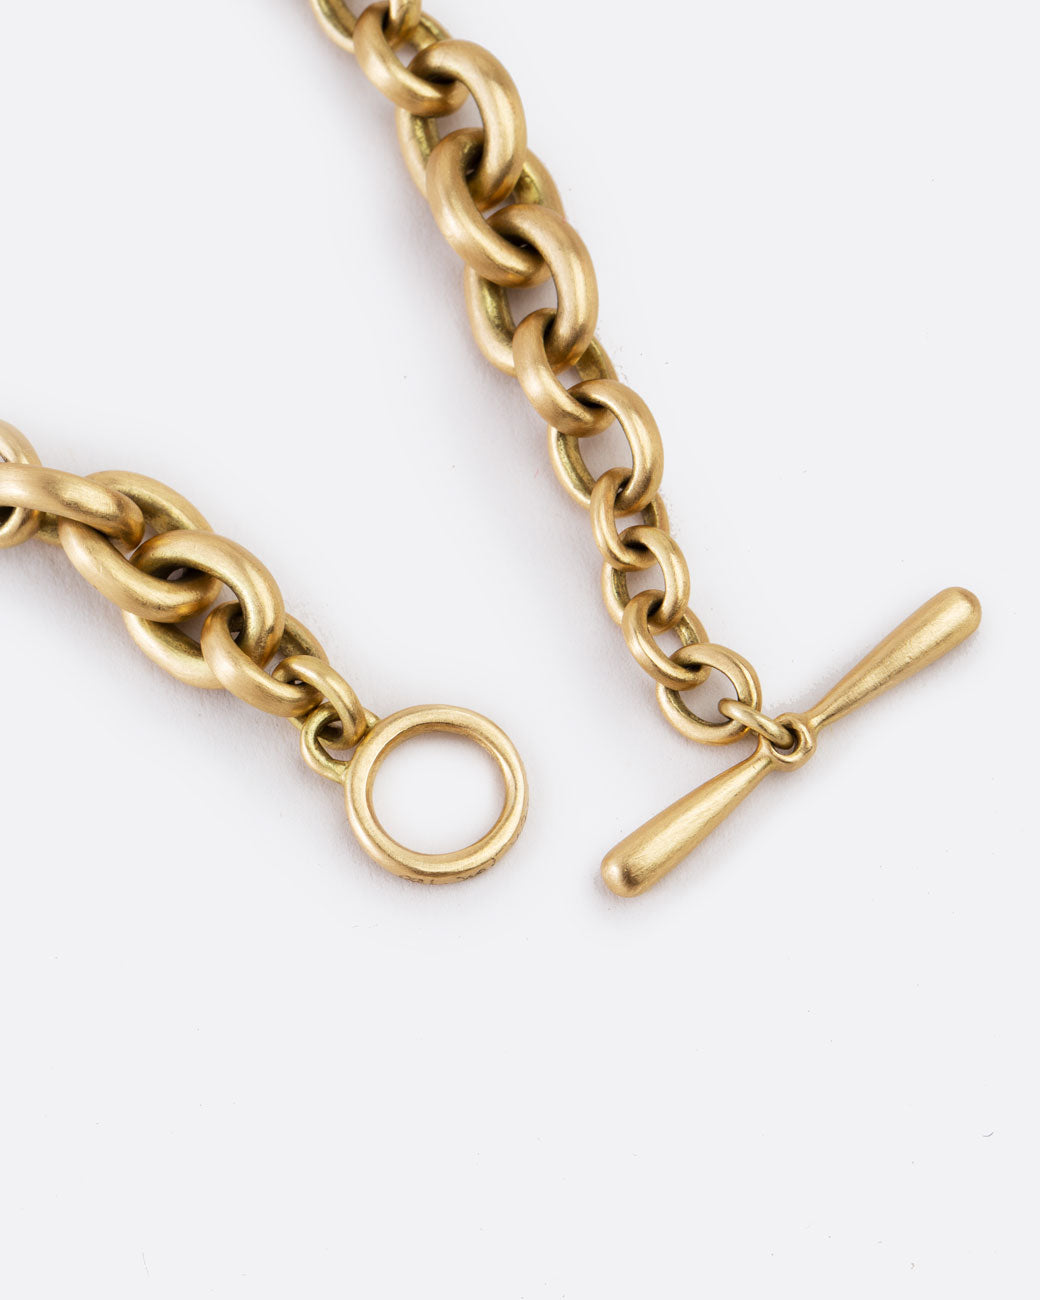 medium link bracelet of matte gold - close up on toggle clasp